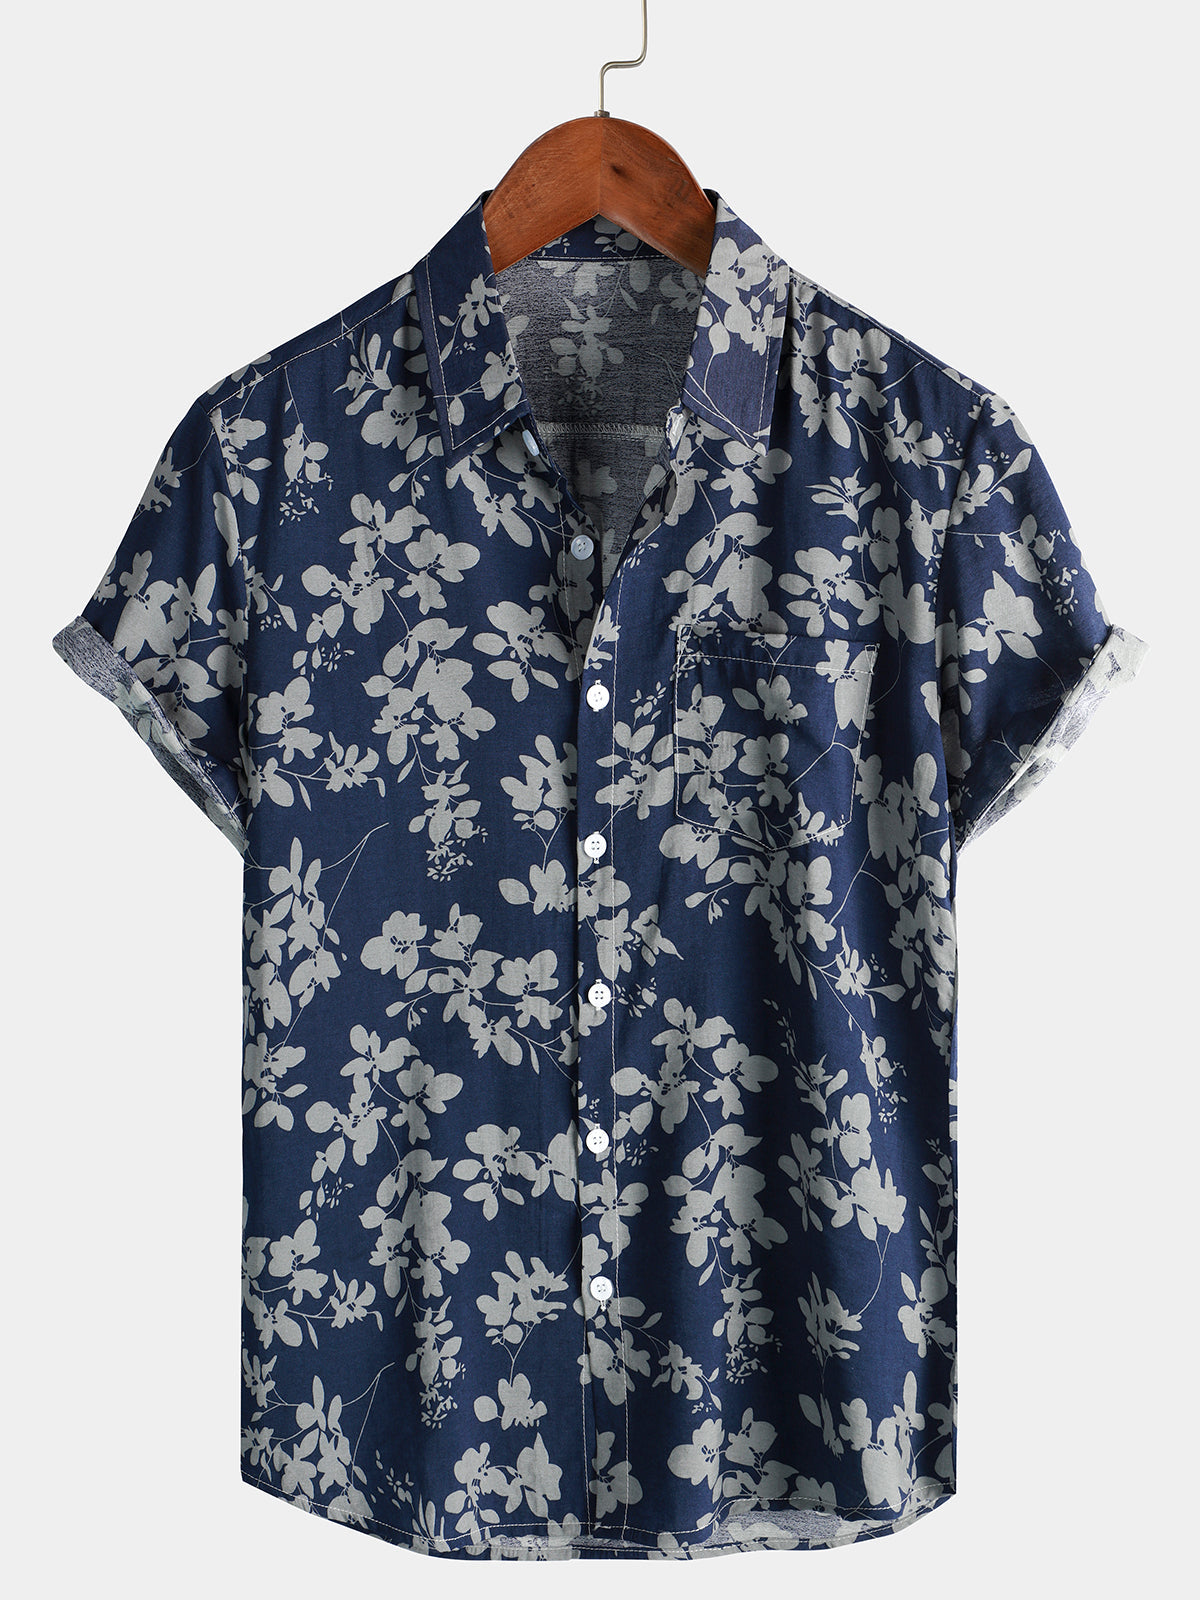 Men's Vintage Floral Print Holiday Navy Blue Button Up Short Sleeve Shirt